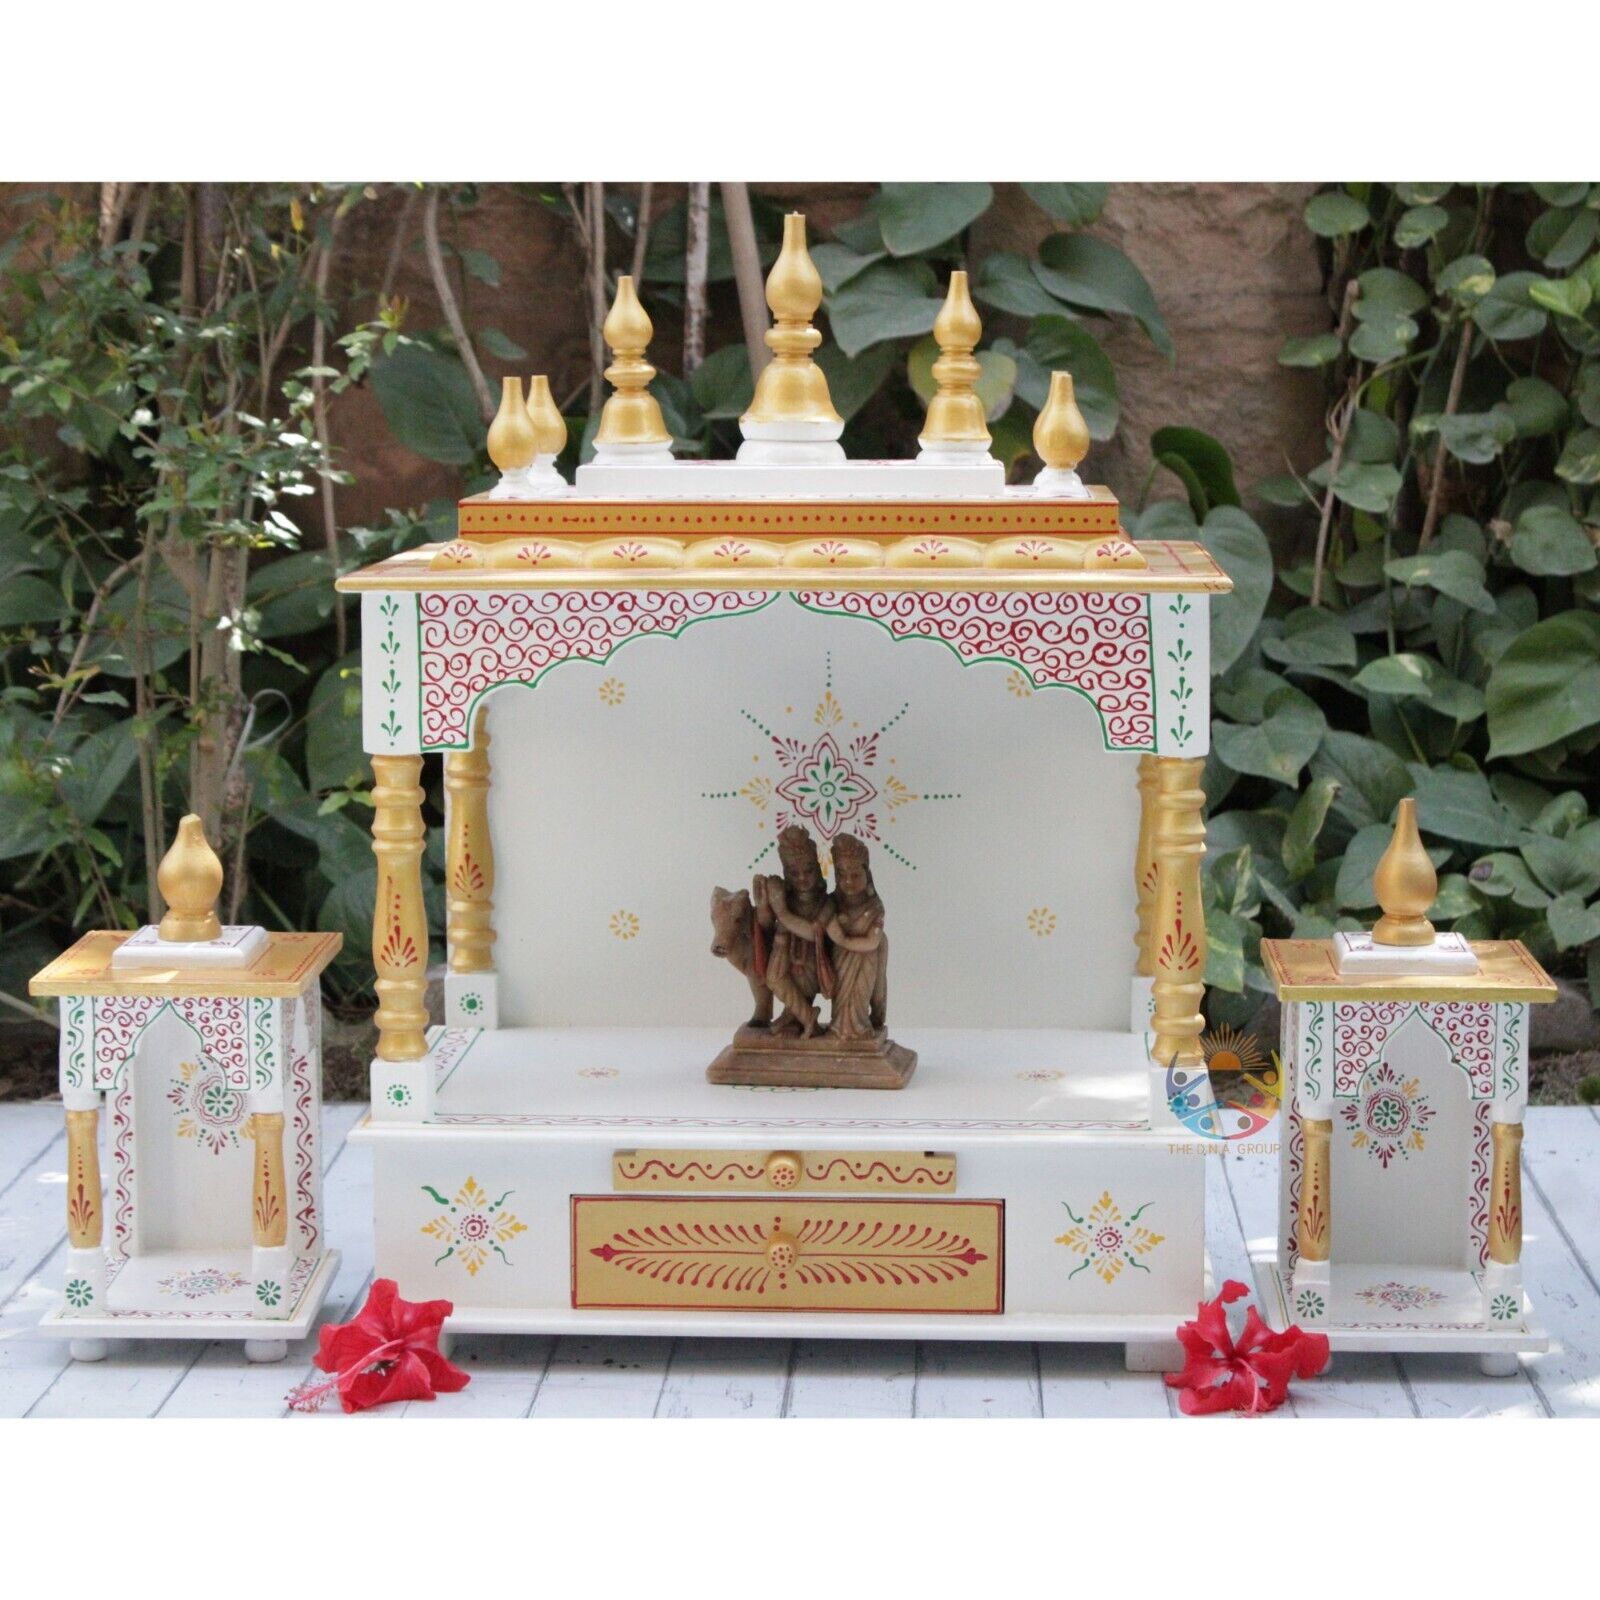 Hot Selling Hindu Pooja Mandir Buy One & Get 2 Free For Home Decor Indian Shrine